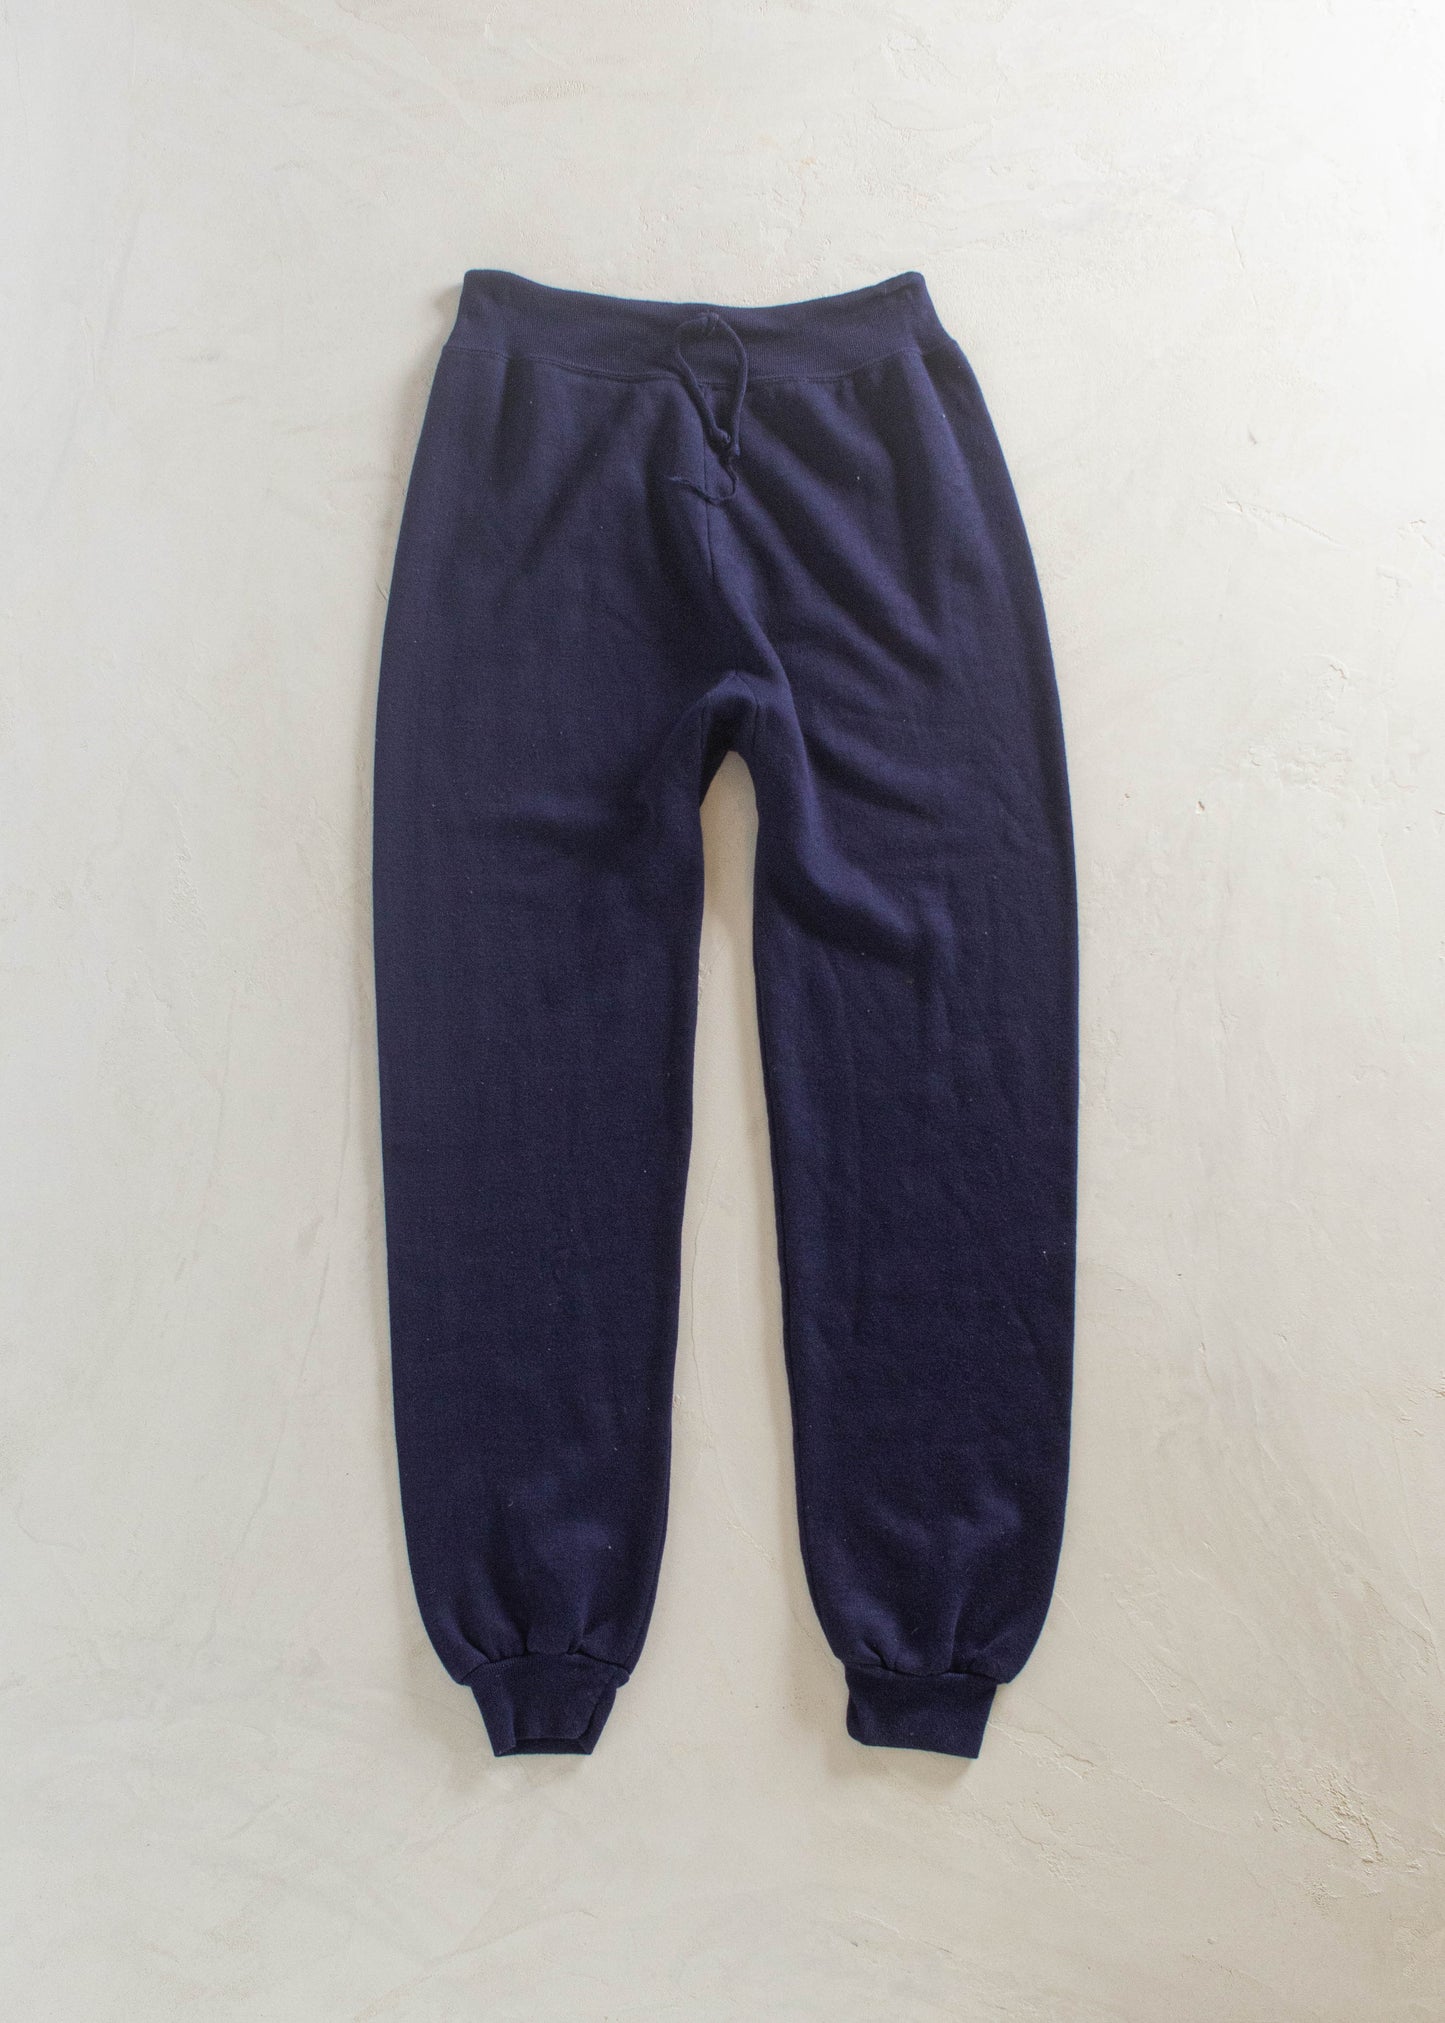 1990s Drawstring Sweatpants Size XS/S